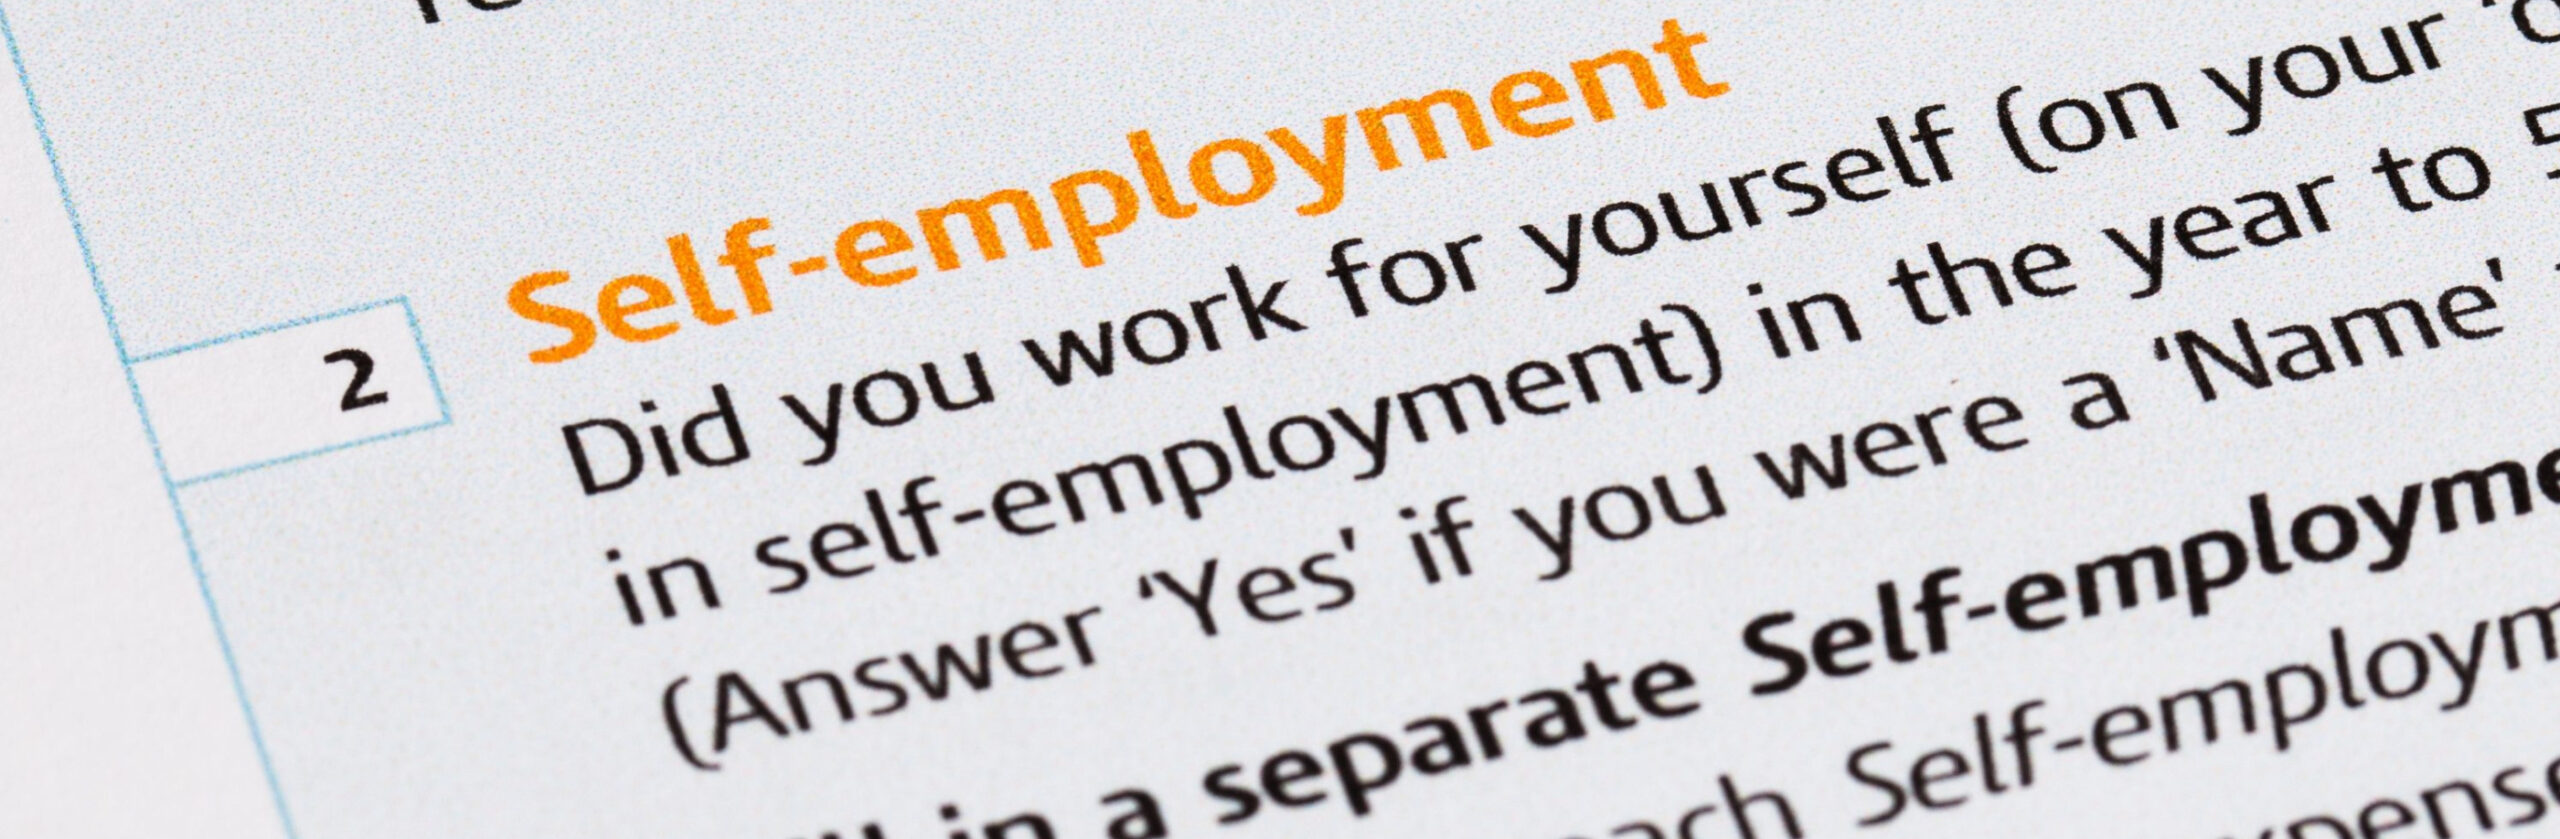 Self-Employed Retirement Plans Arnold, MO | Financial Advisors | Retirement Consultants Near Arnold